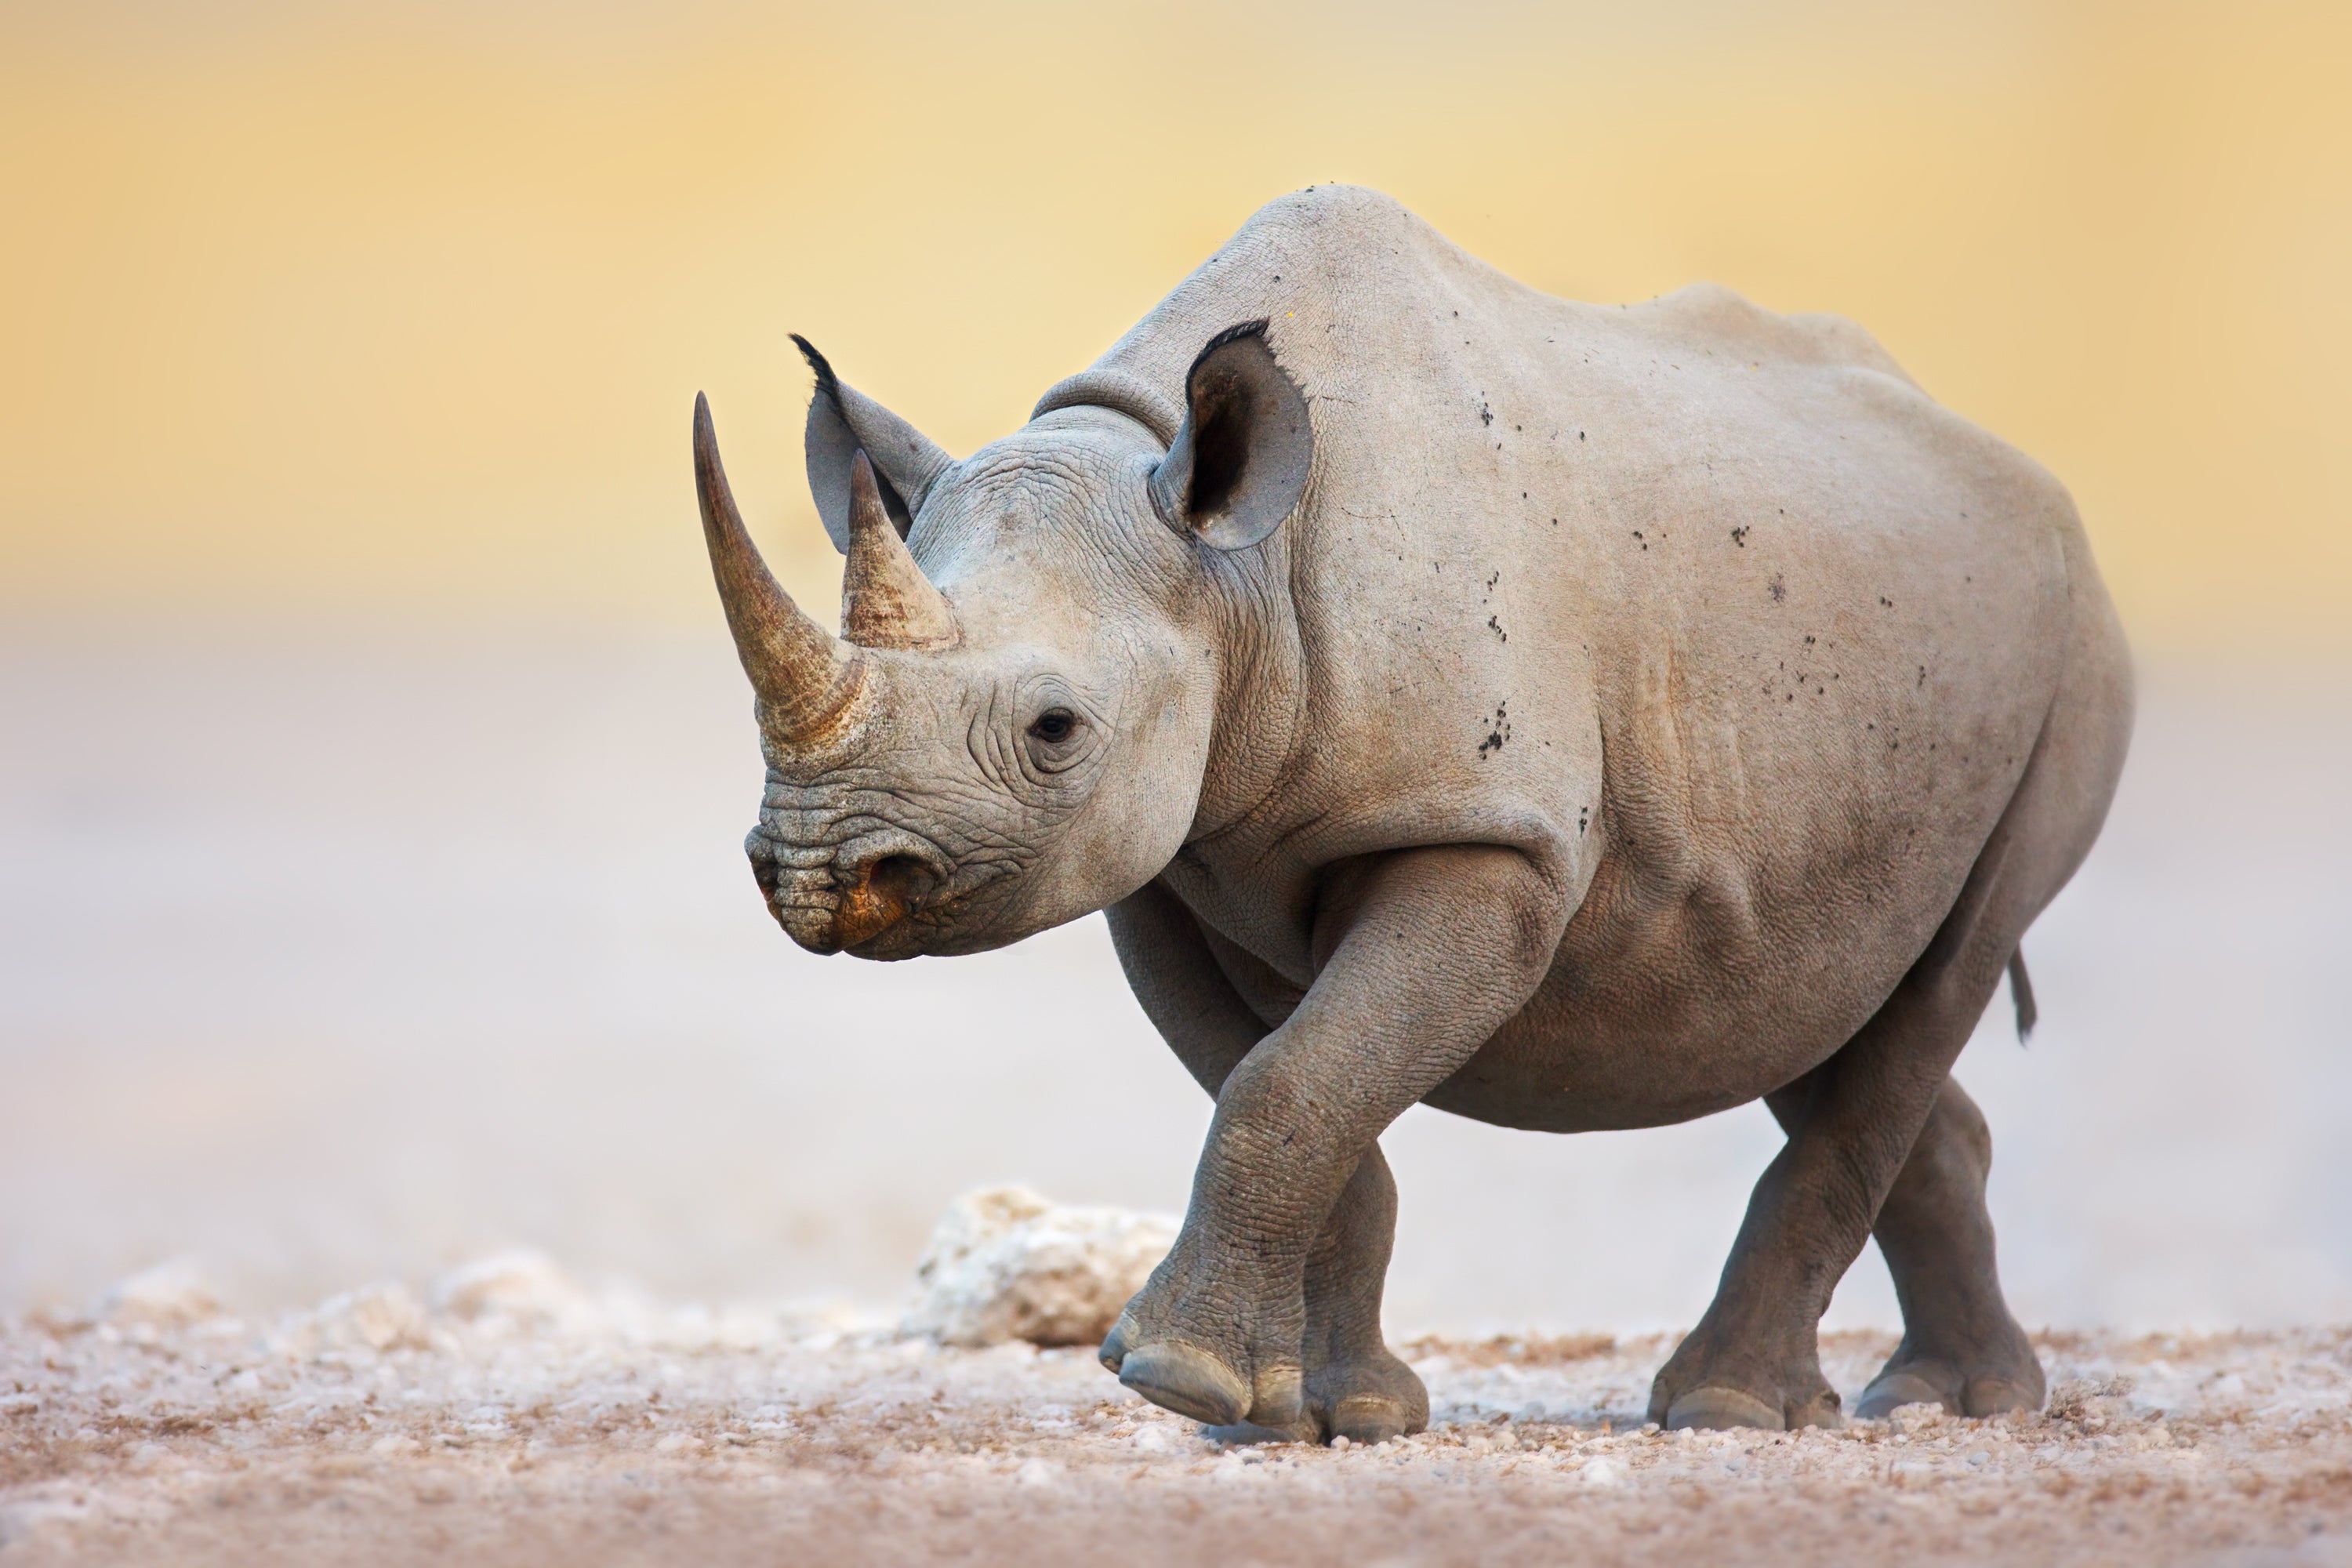 Rhino and Elephant Protection - Humane Society International